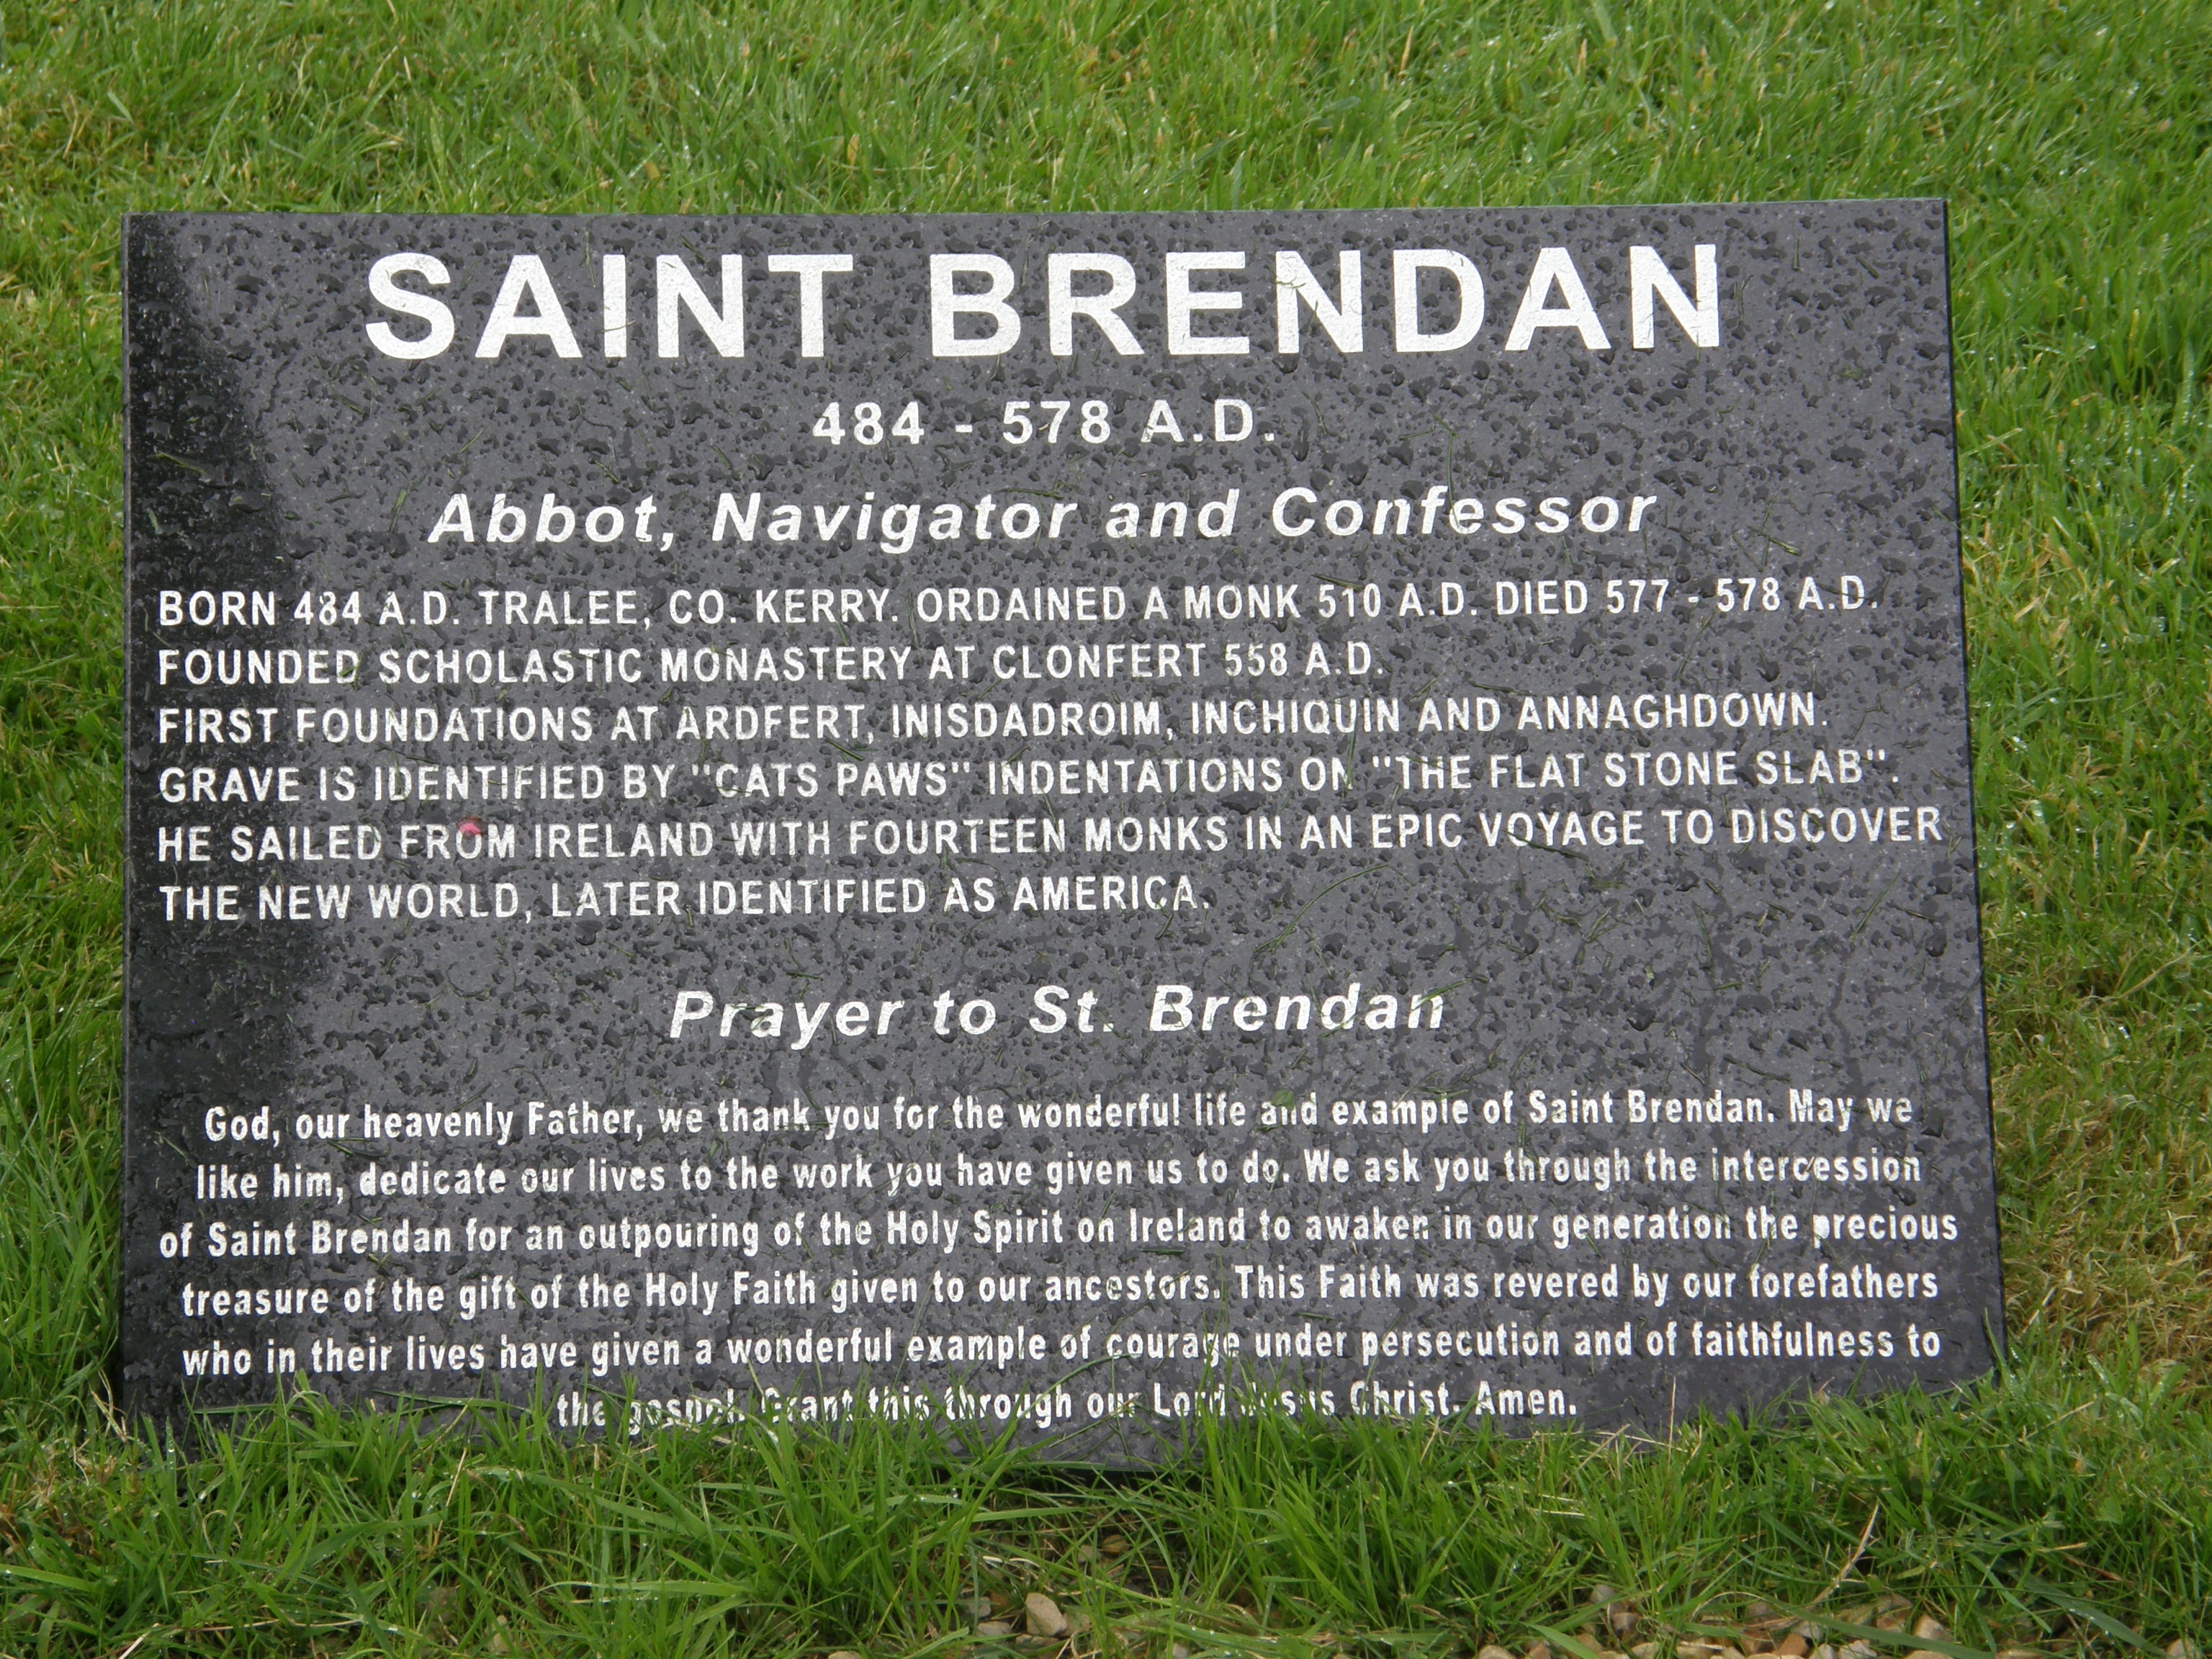 Headstone on St. Brendan's Grave